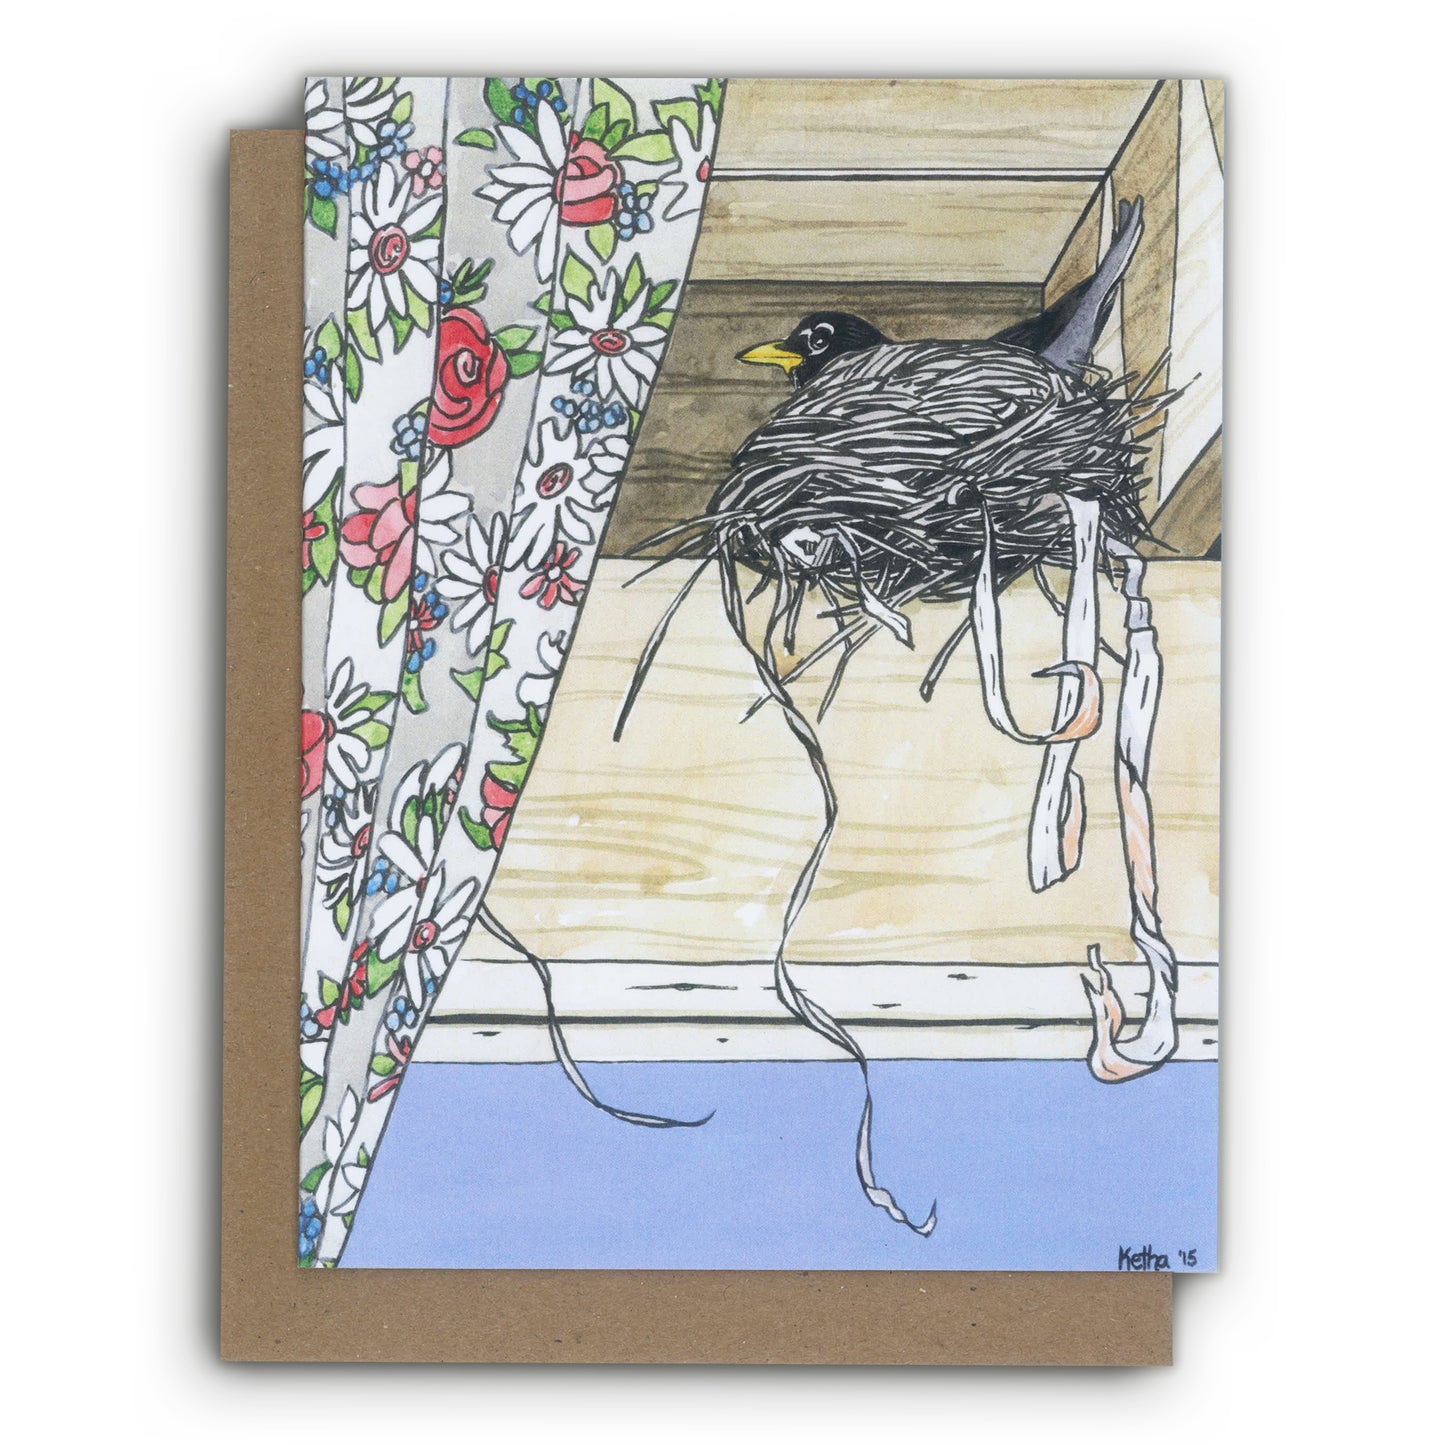 Ketha Newman Summer Art Cards Boxset